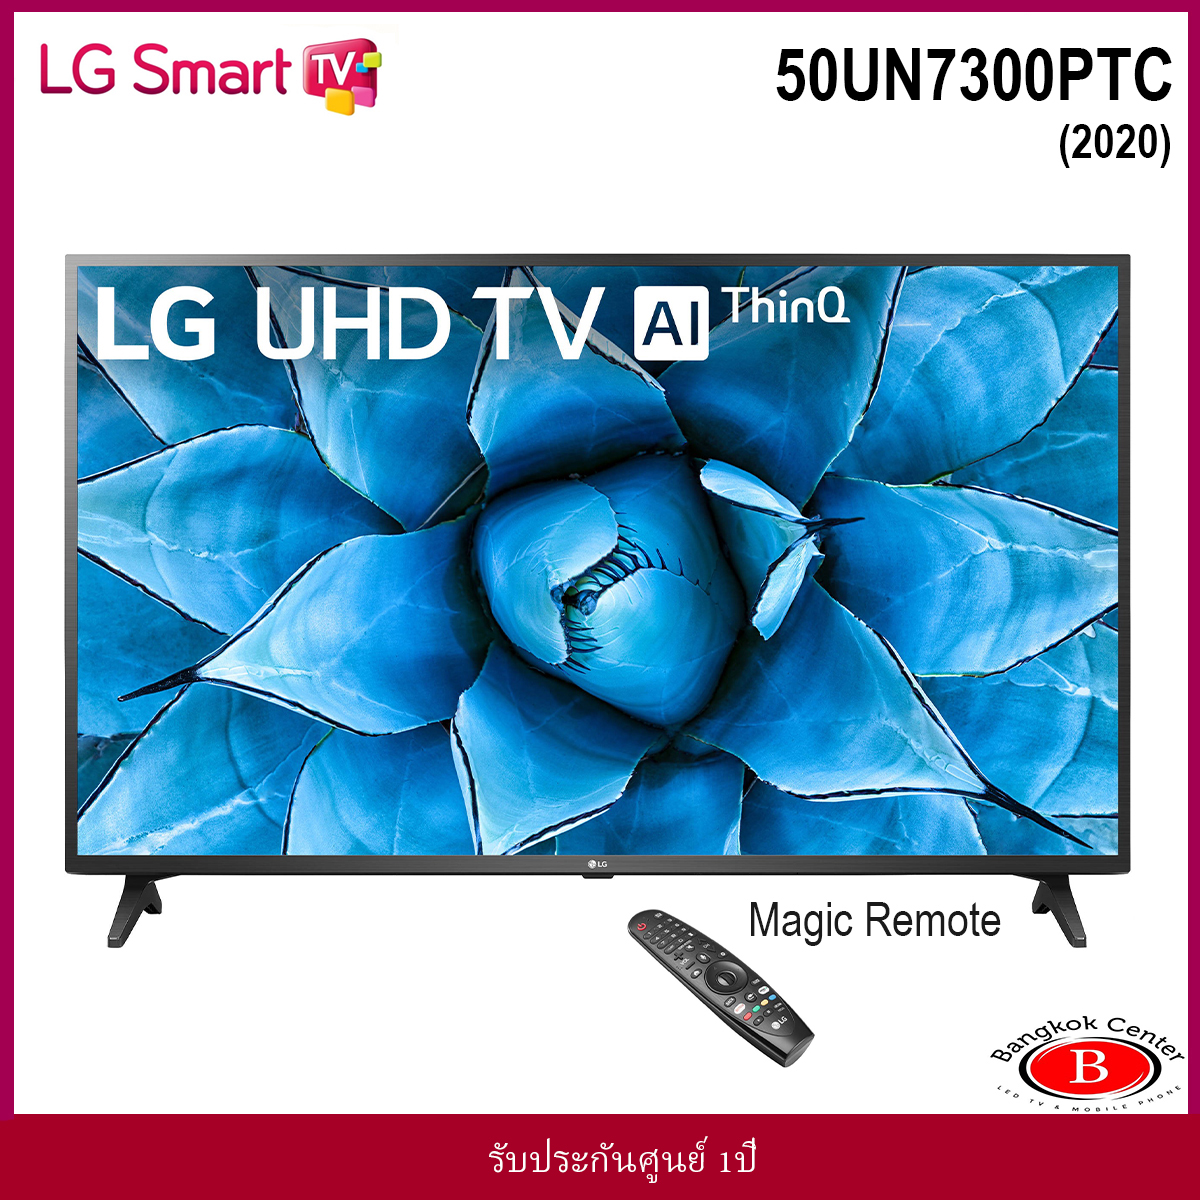 LG 4K Smart TV UHD 50